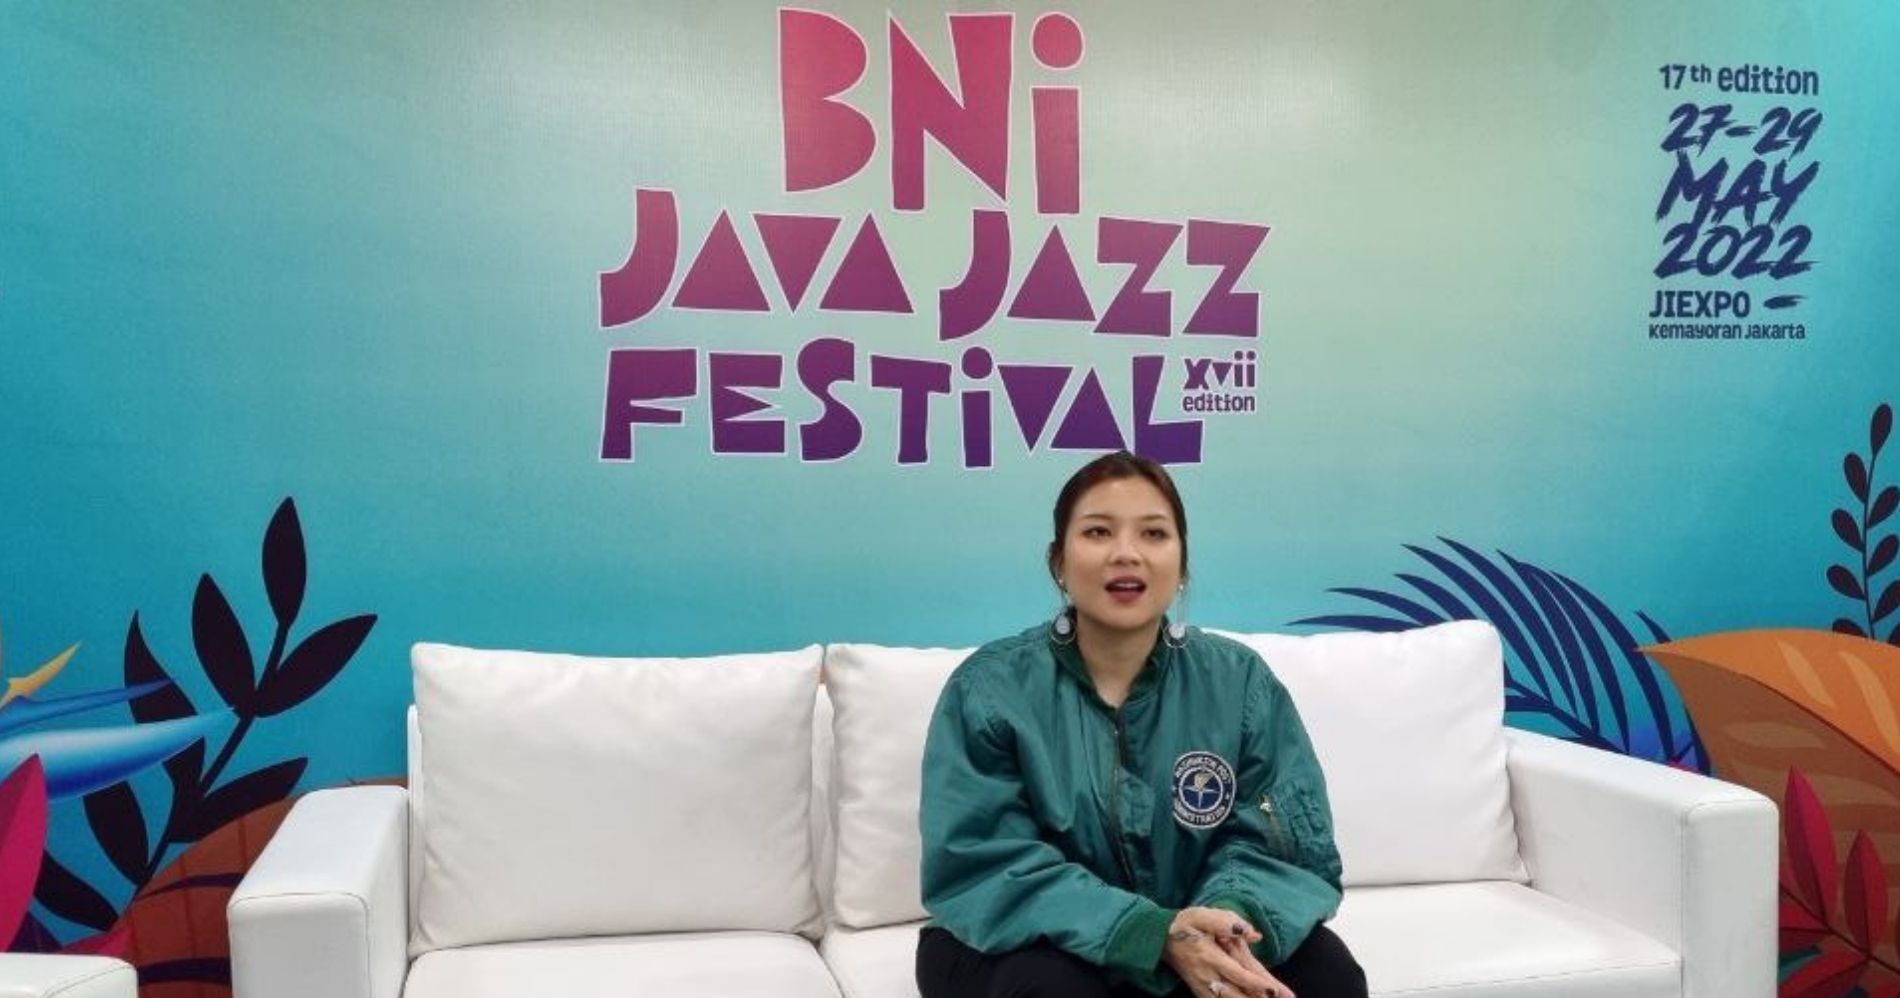 3 Cerita Menarik Danilla di Java Jazz Festival 2022 Ilustrasi Bisnis Muda - Image: Rachma Amalia